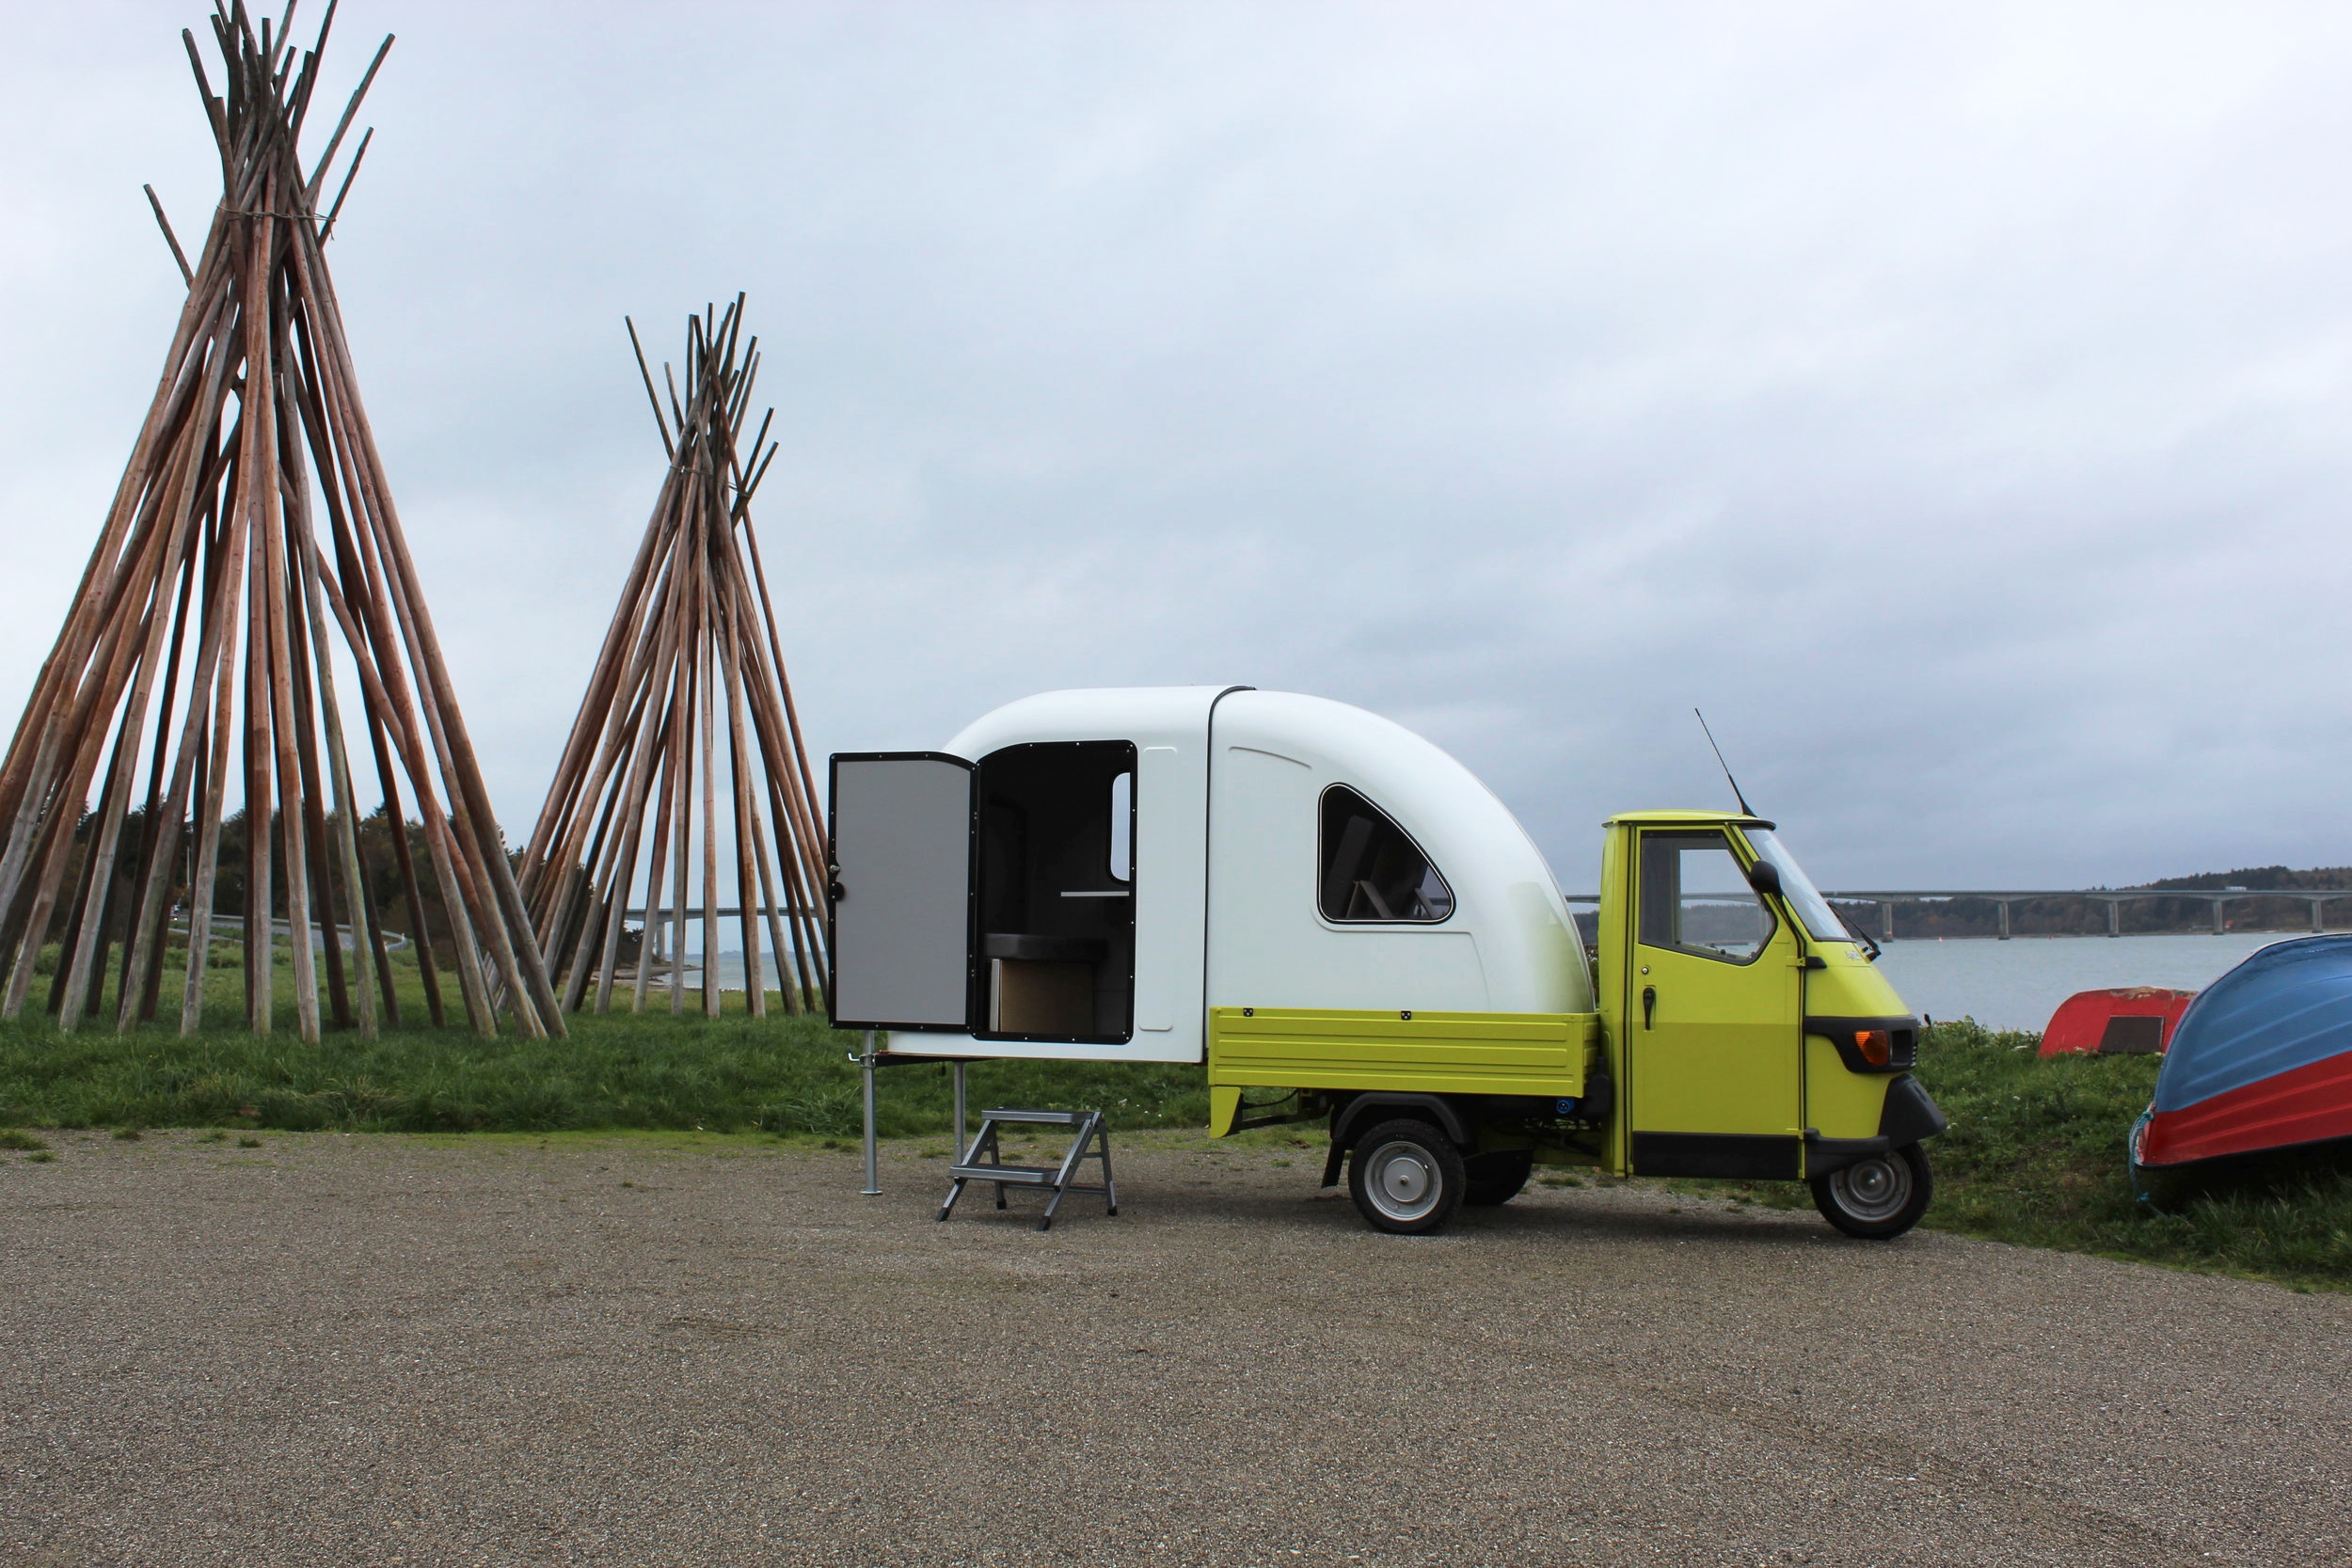 APE Camper, Mobile Camping Solutions For APE Vans